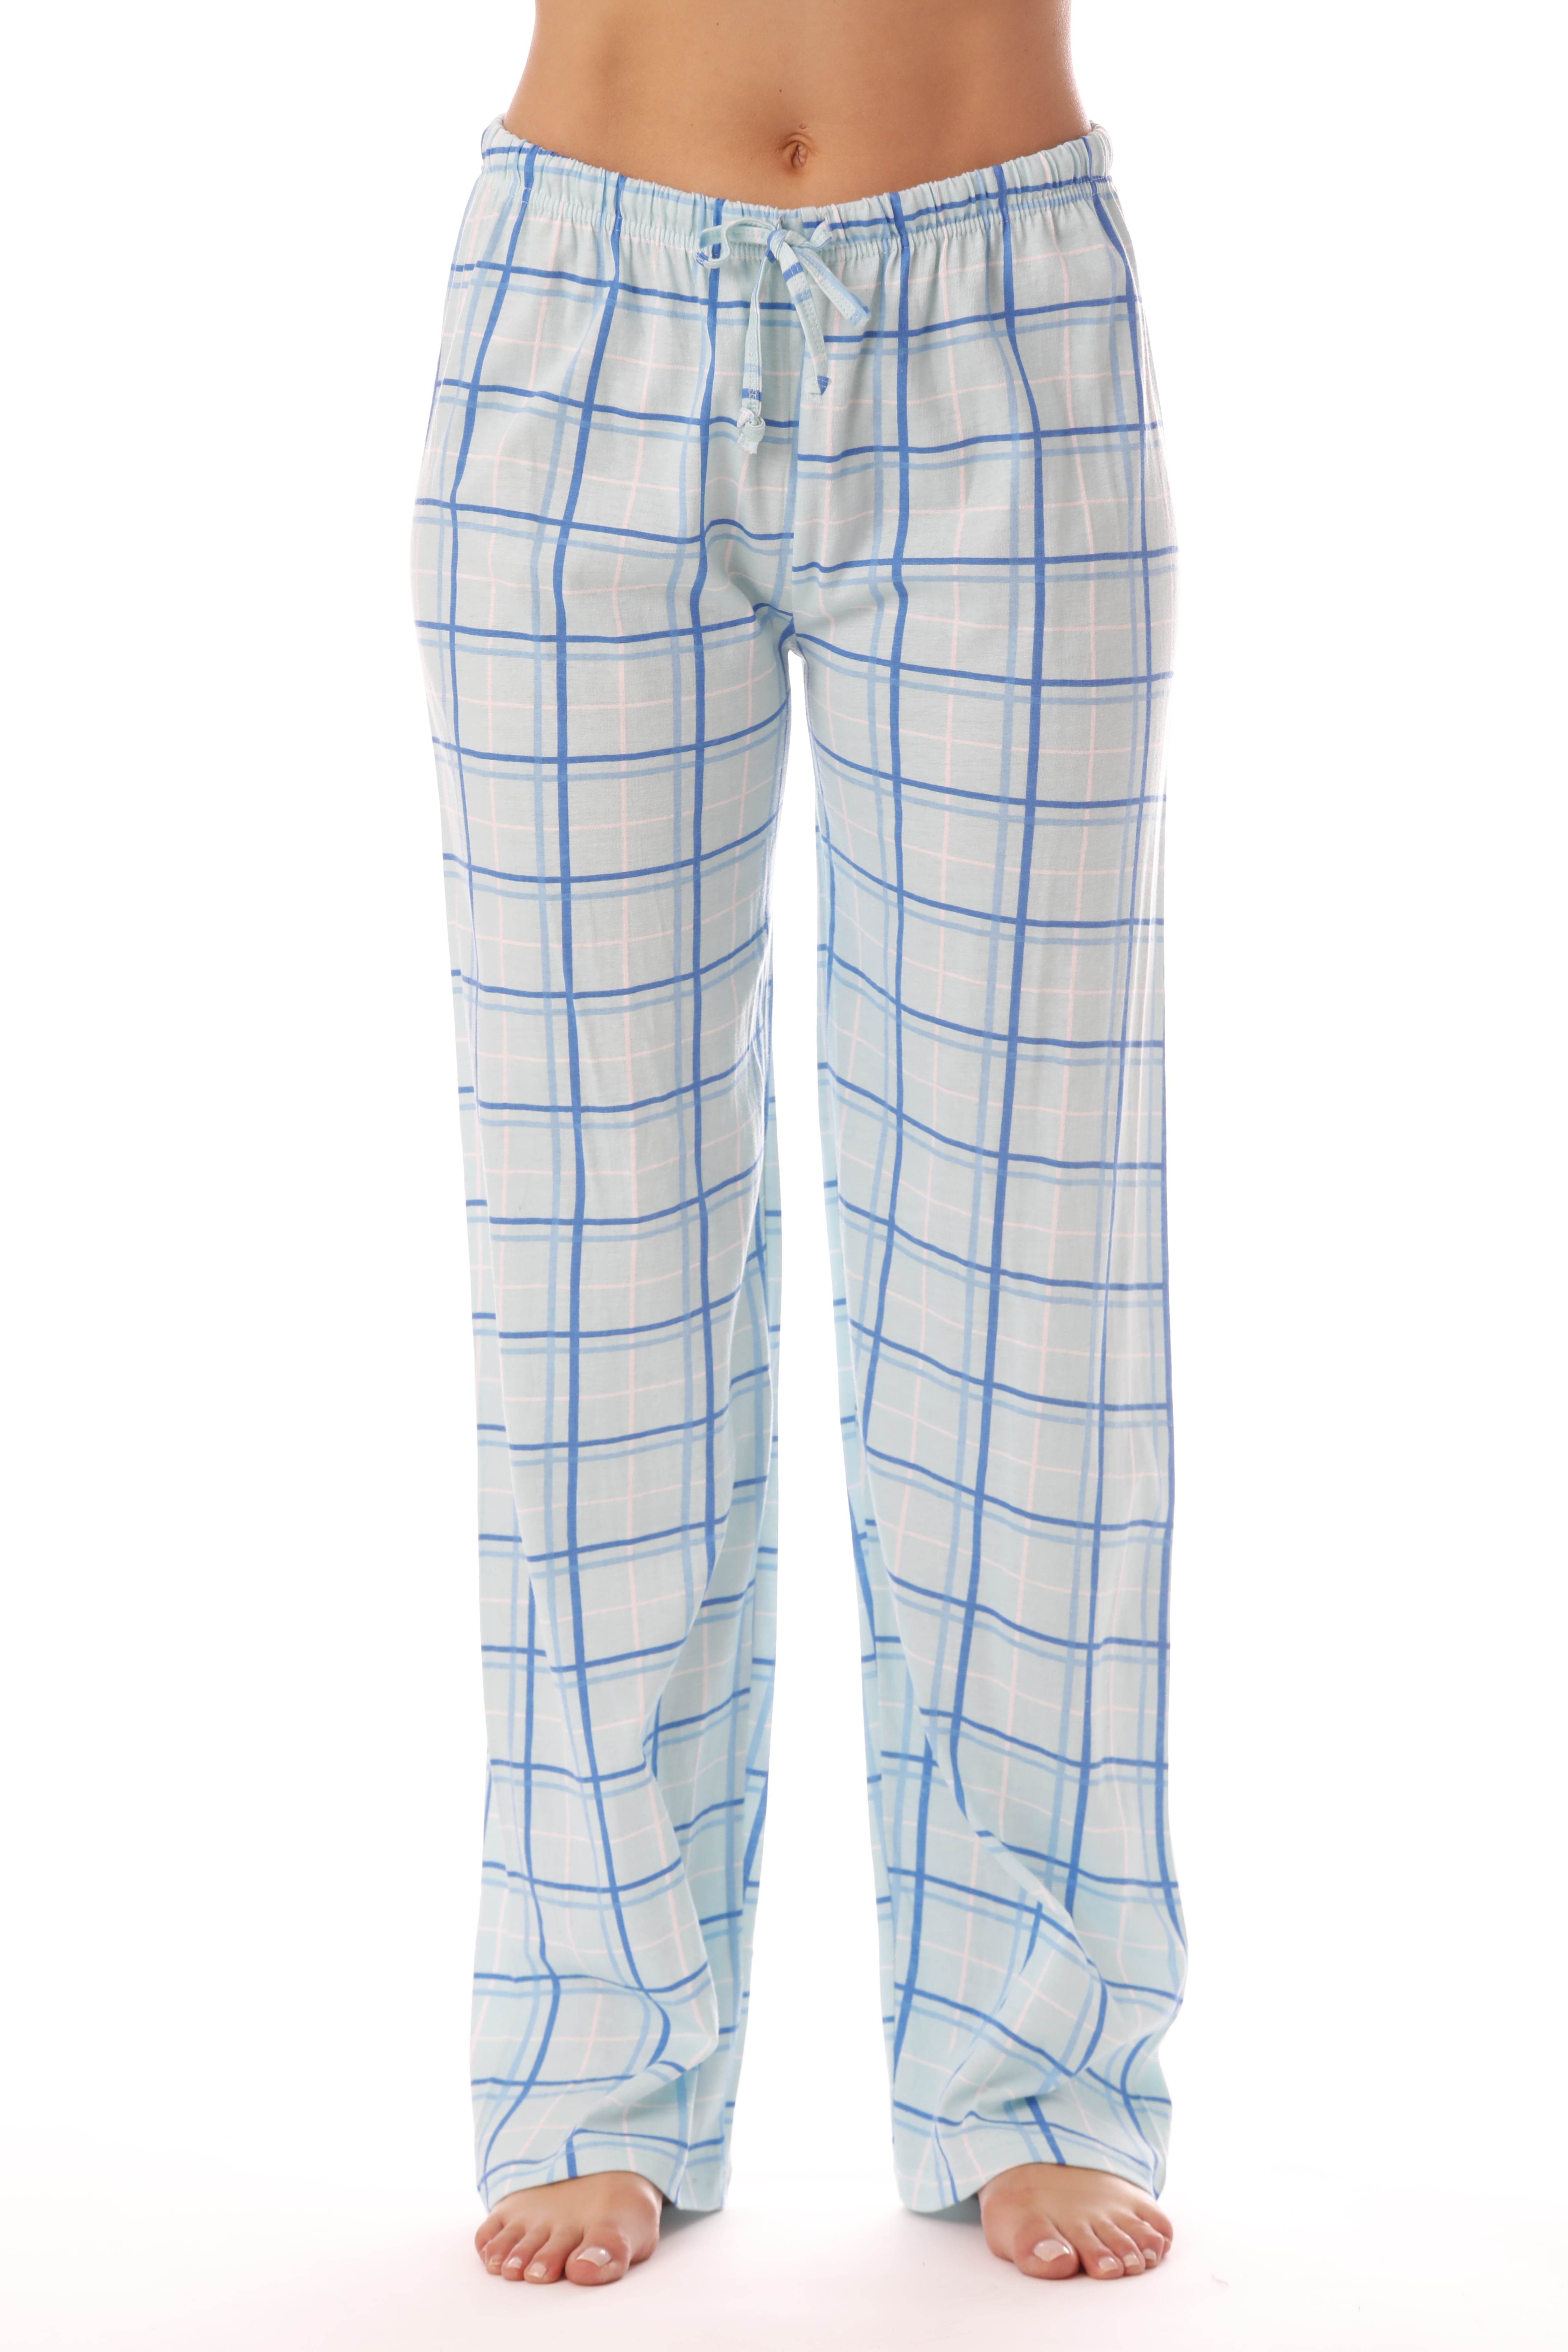 Just Love Women Plaid Pajama Pants Sleepwear (Blue Plaid, 1X)